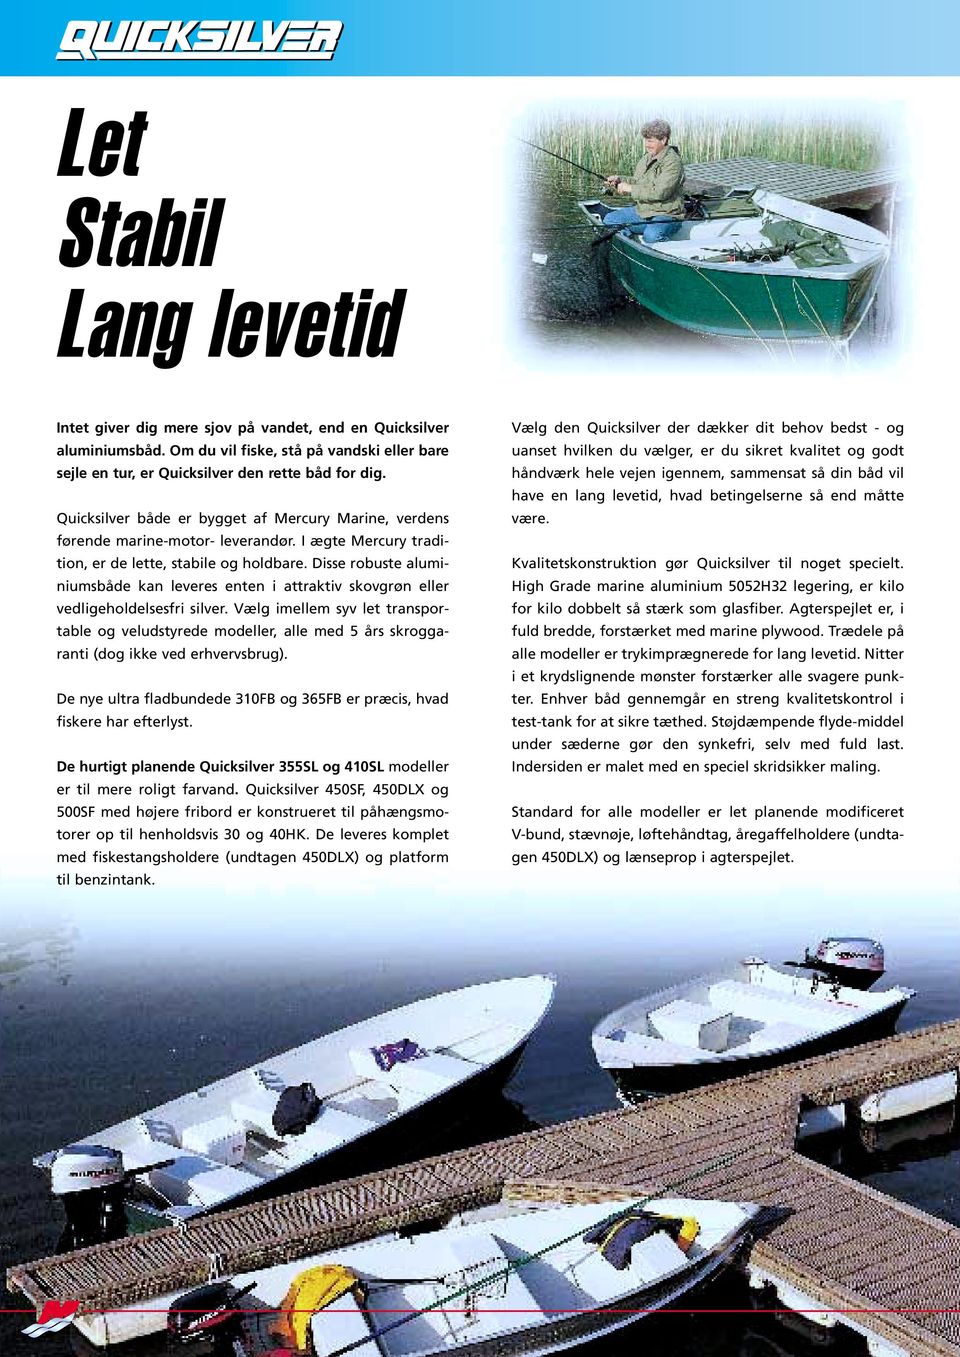 Disse robuste aluminiumsbåde kan leveres enten i attraktiv skovgrøn eller vedligeholdelsesfri silver.